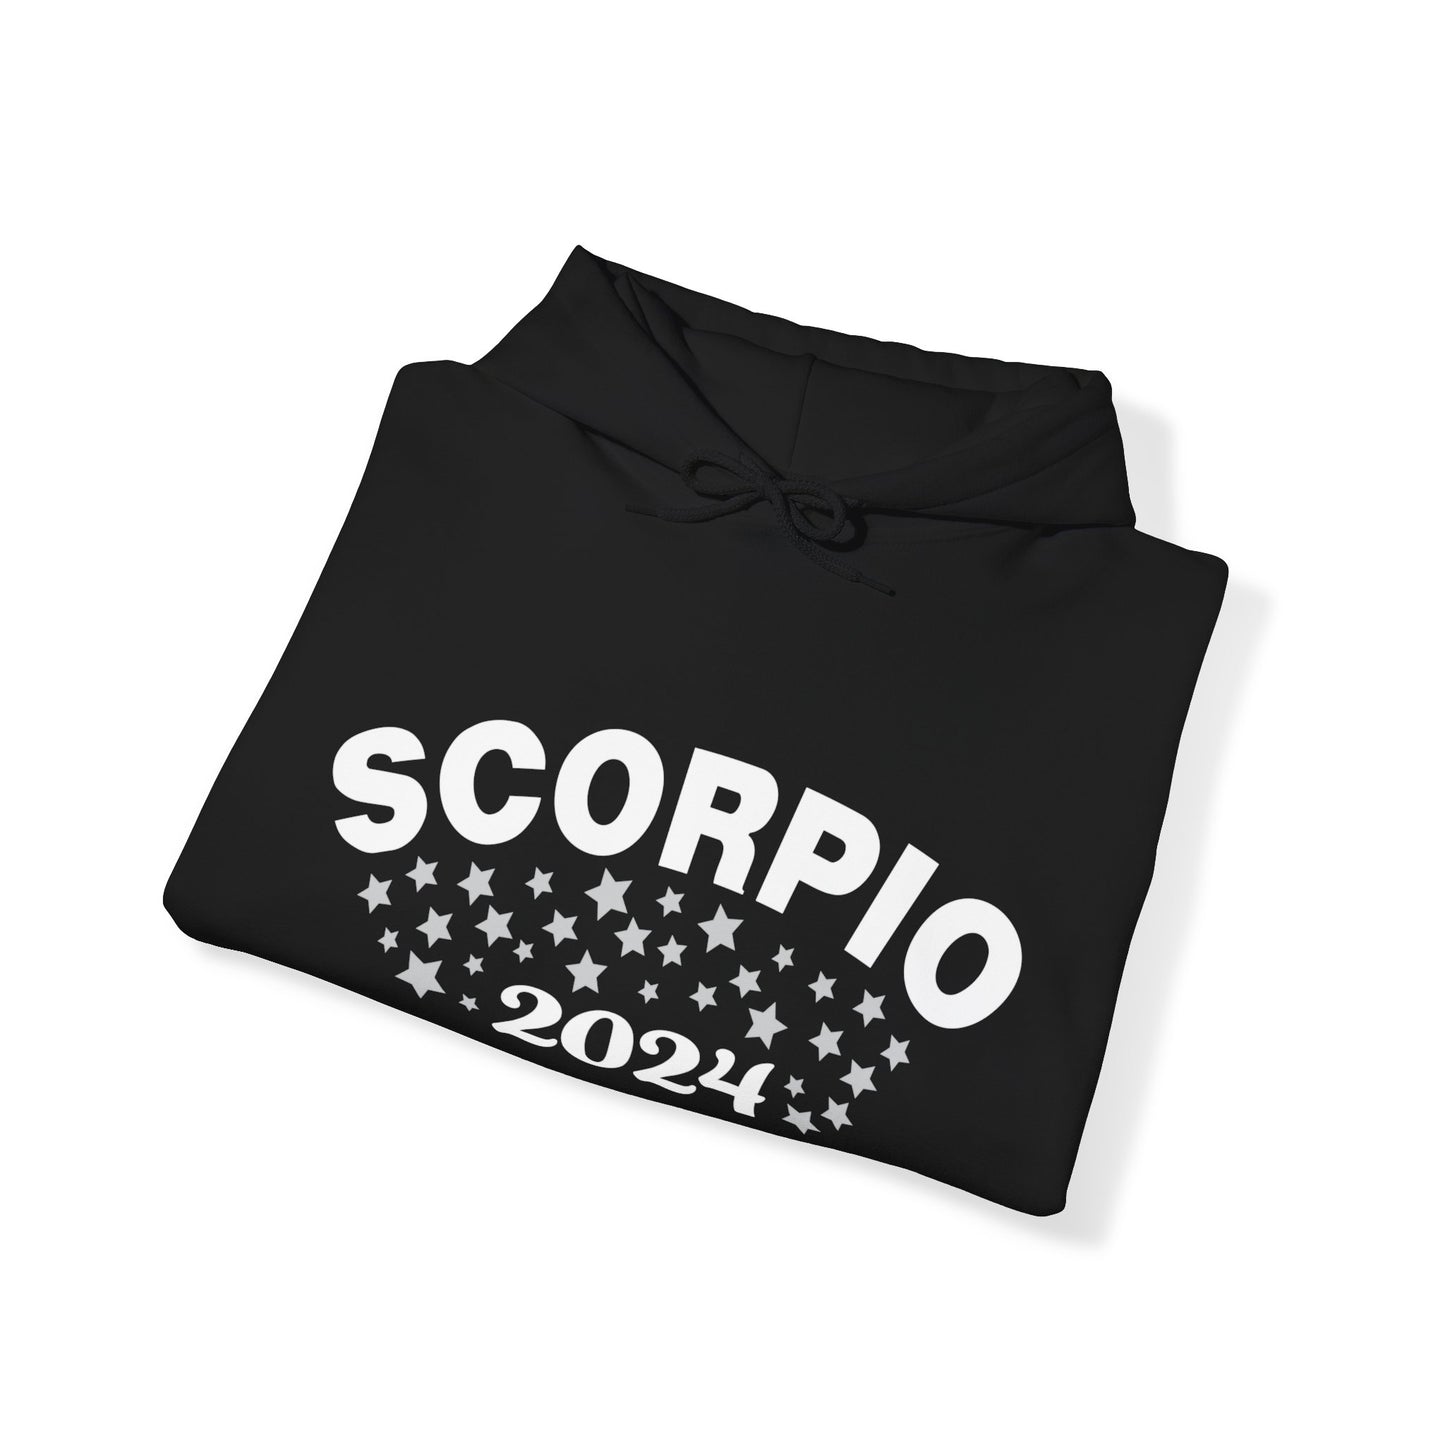 Scorpio Hooded Sweatshirt 2024